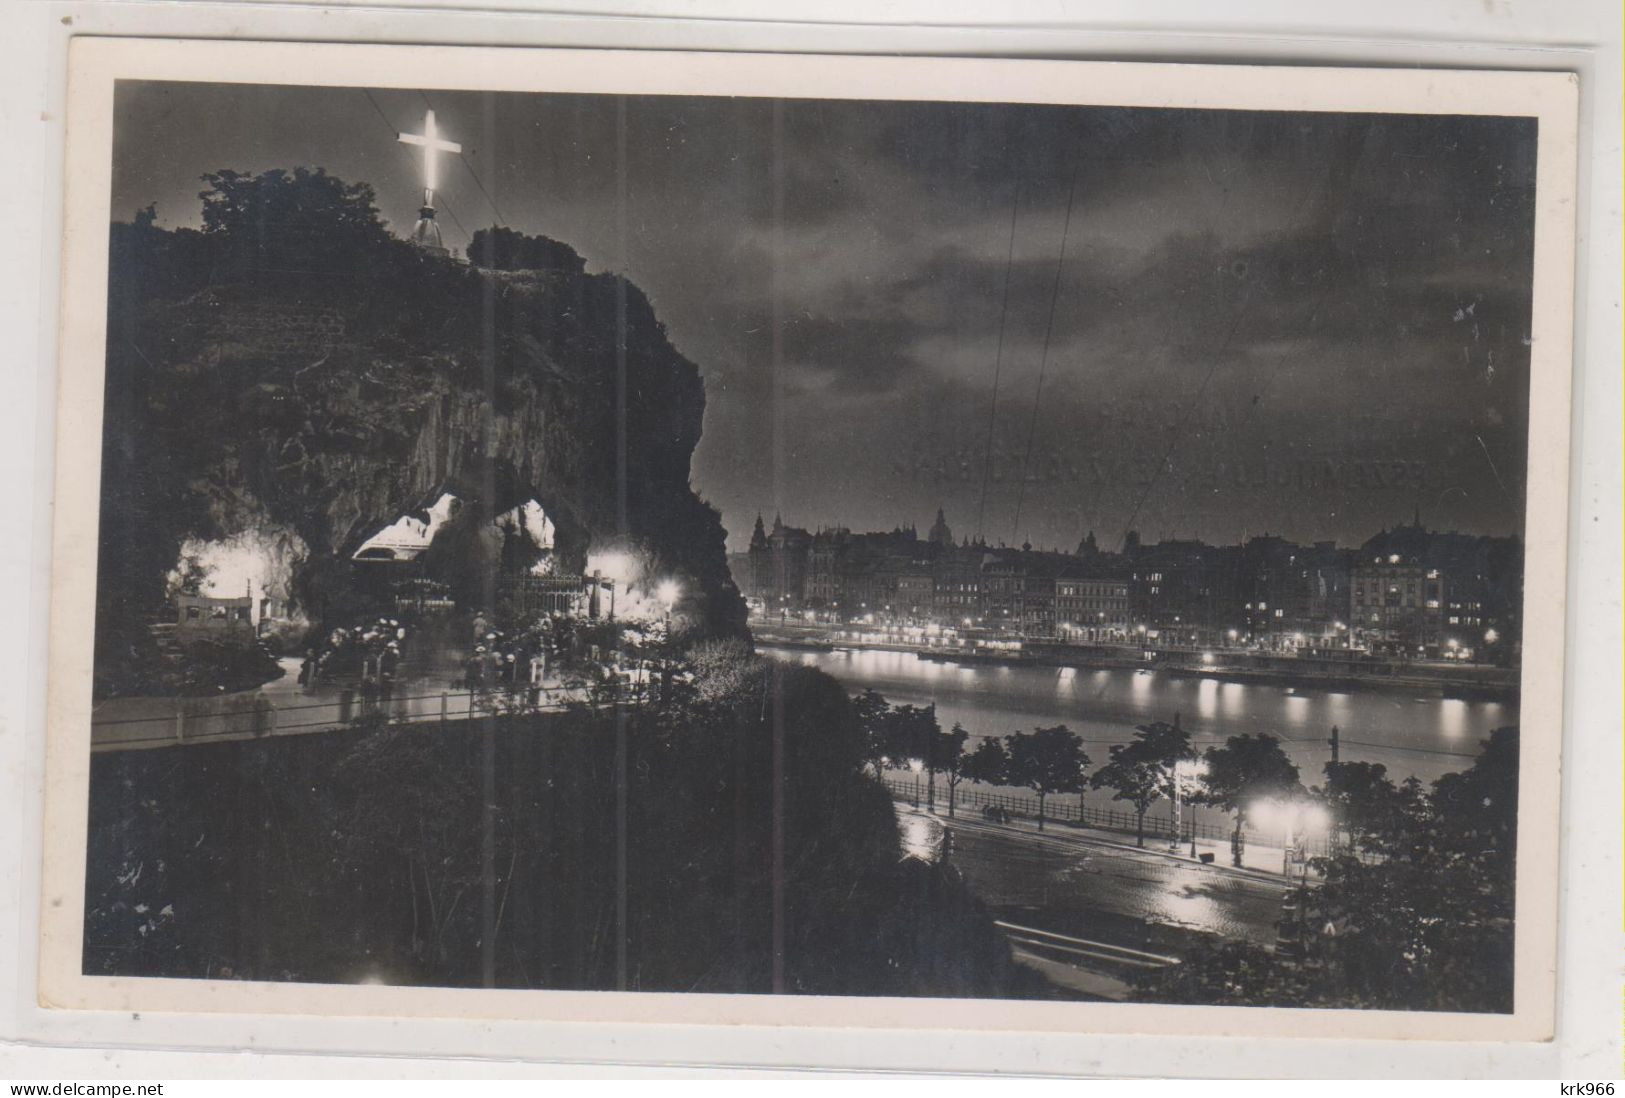 YUGOSLAVIA 1938 STARI BECEJ Postage Due On Postcard From Hungary - Postage Due